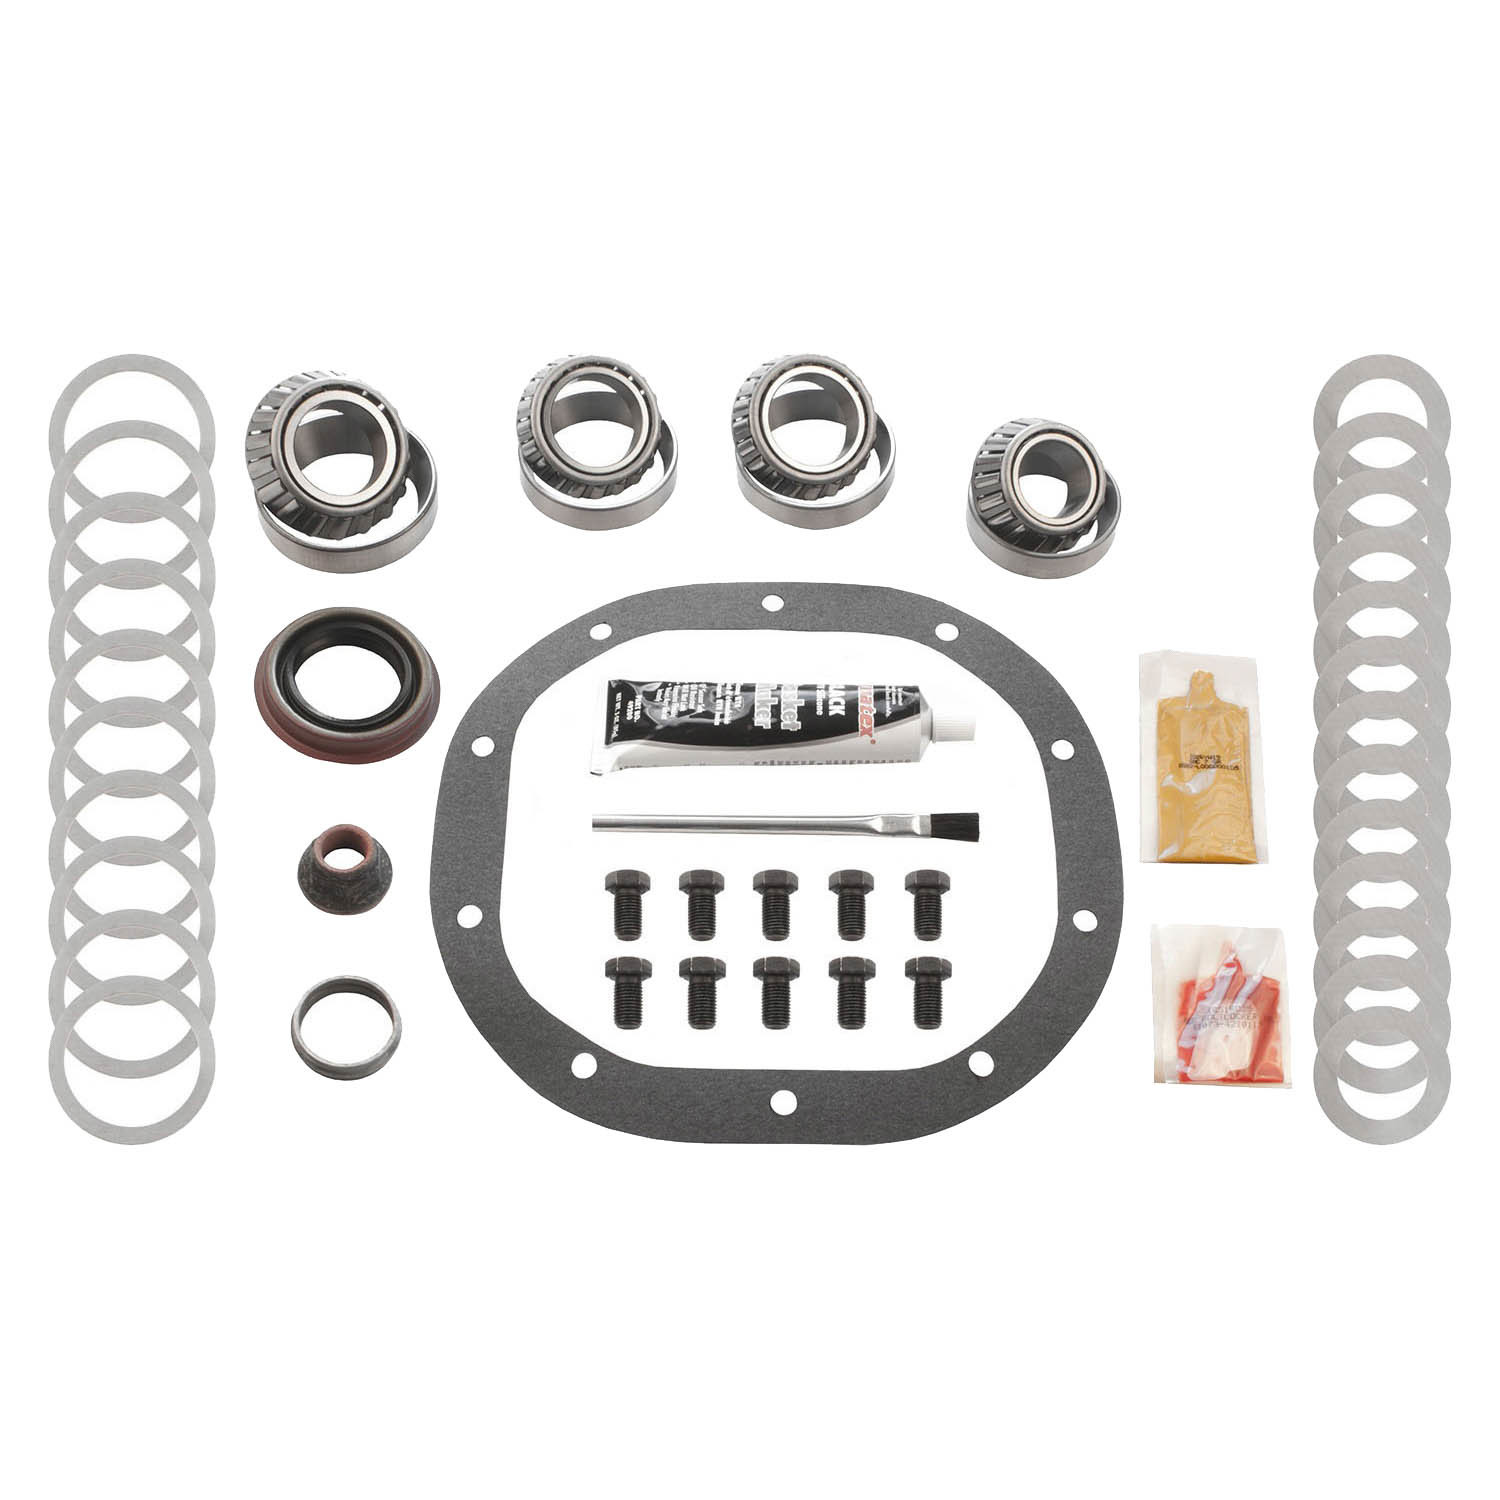 Richmond Gear 83-1045-1 - Differential Installation Kit, Bearings / Crush Sleeve / Gaskets / Hardware / Seals / Shims / Thread Locker, Ford 7.5 in, Kit